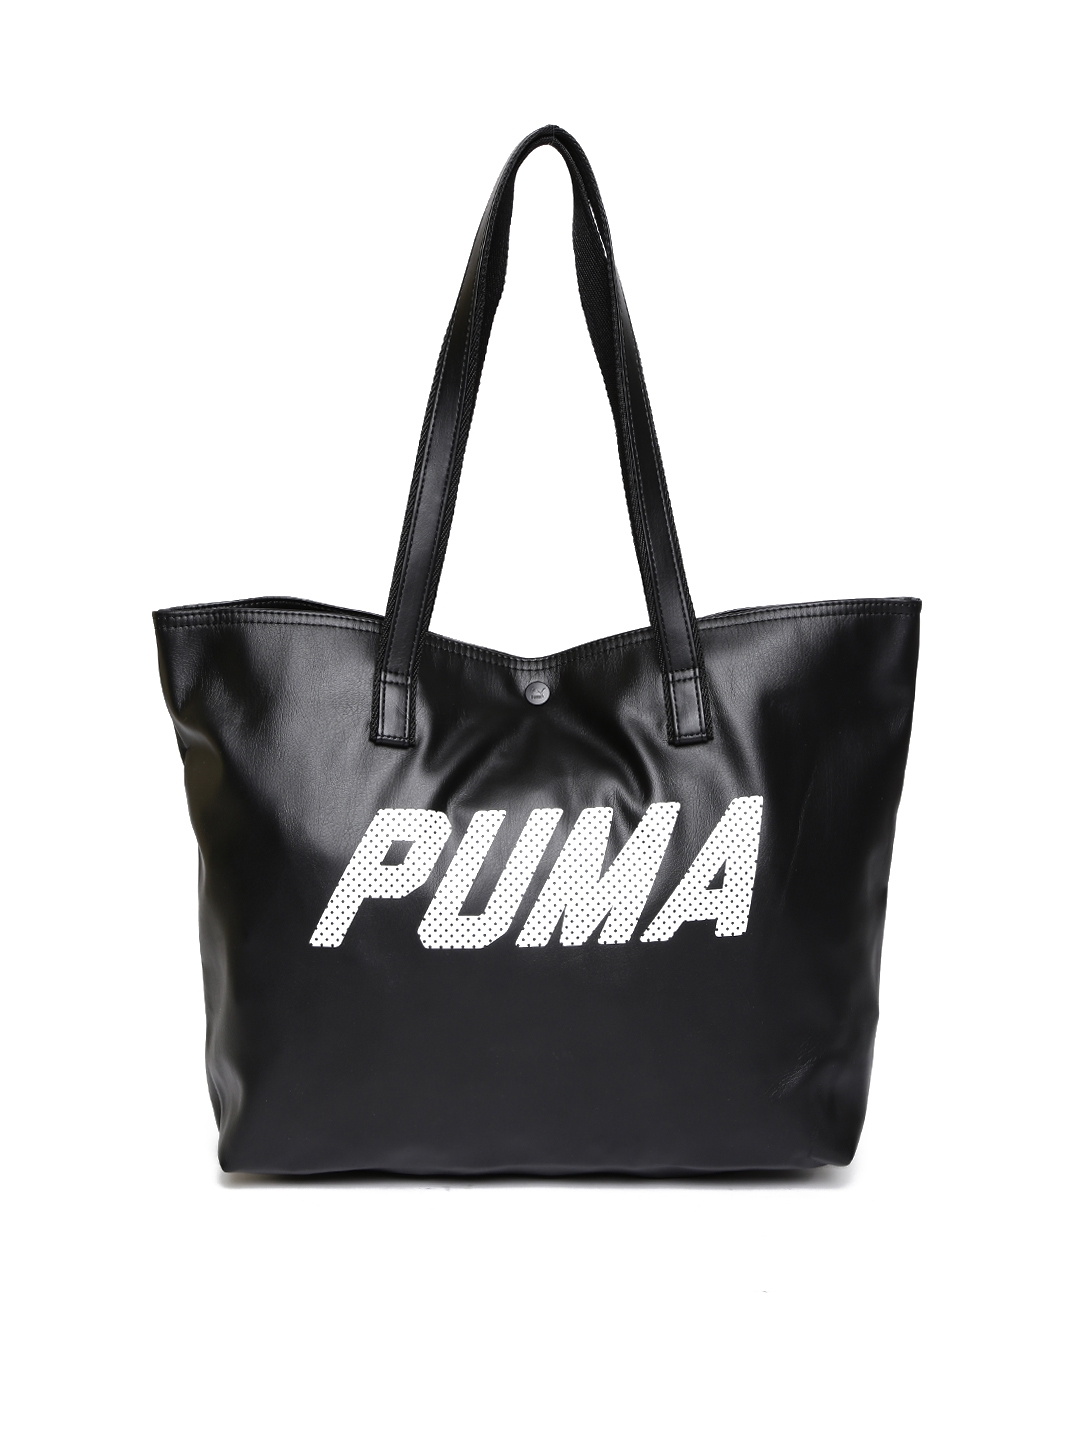 puma handbags online india